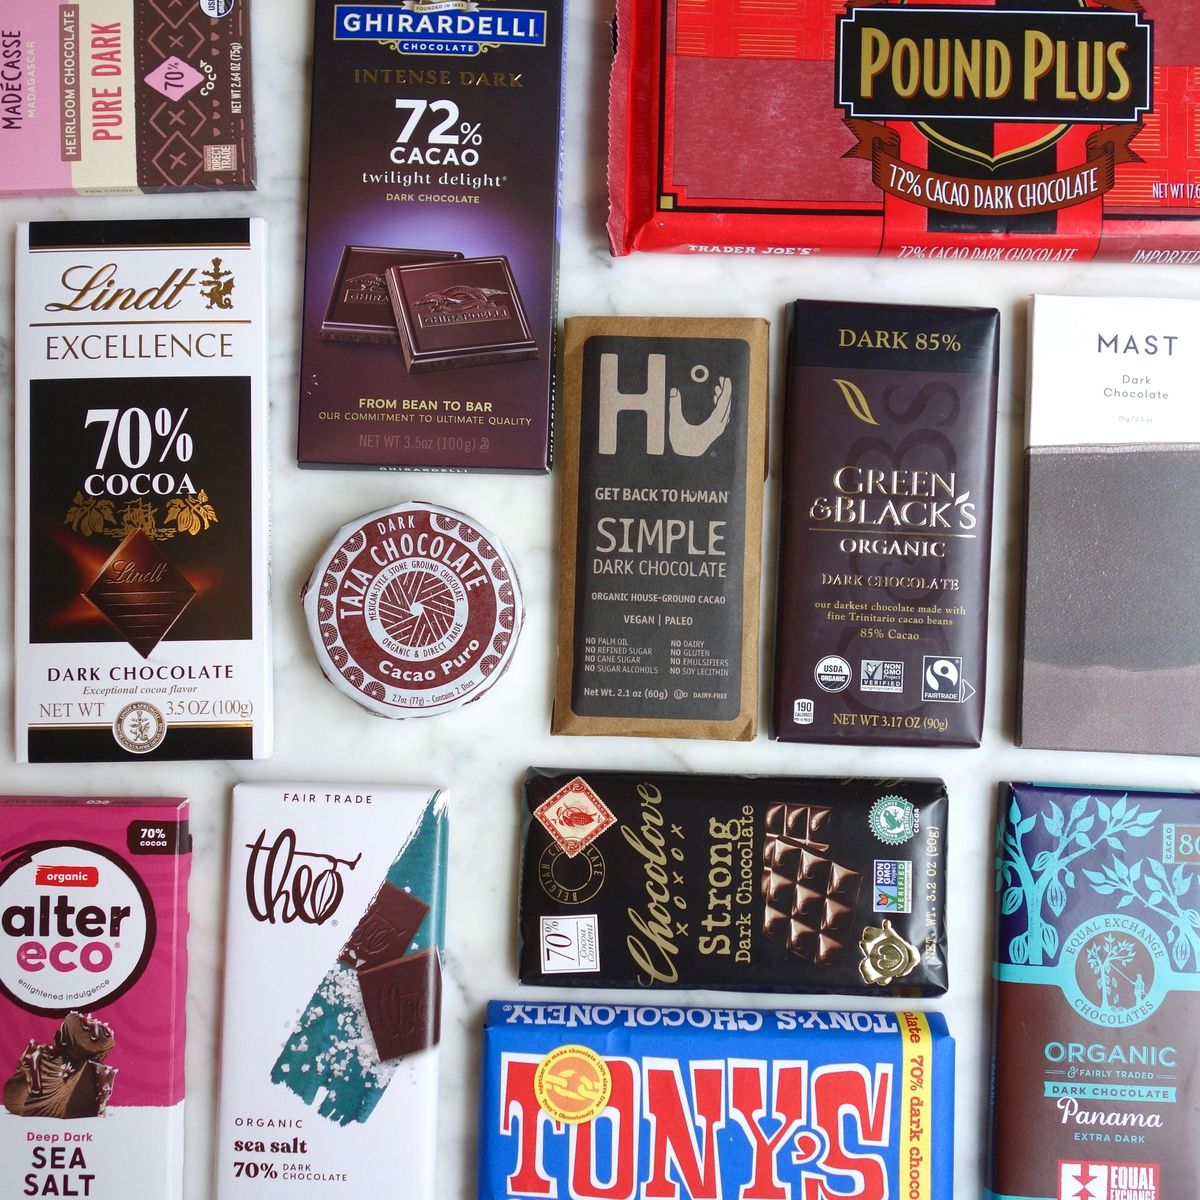 How popular is dark chocolate?